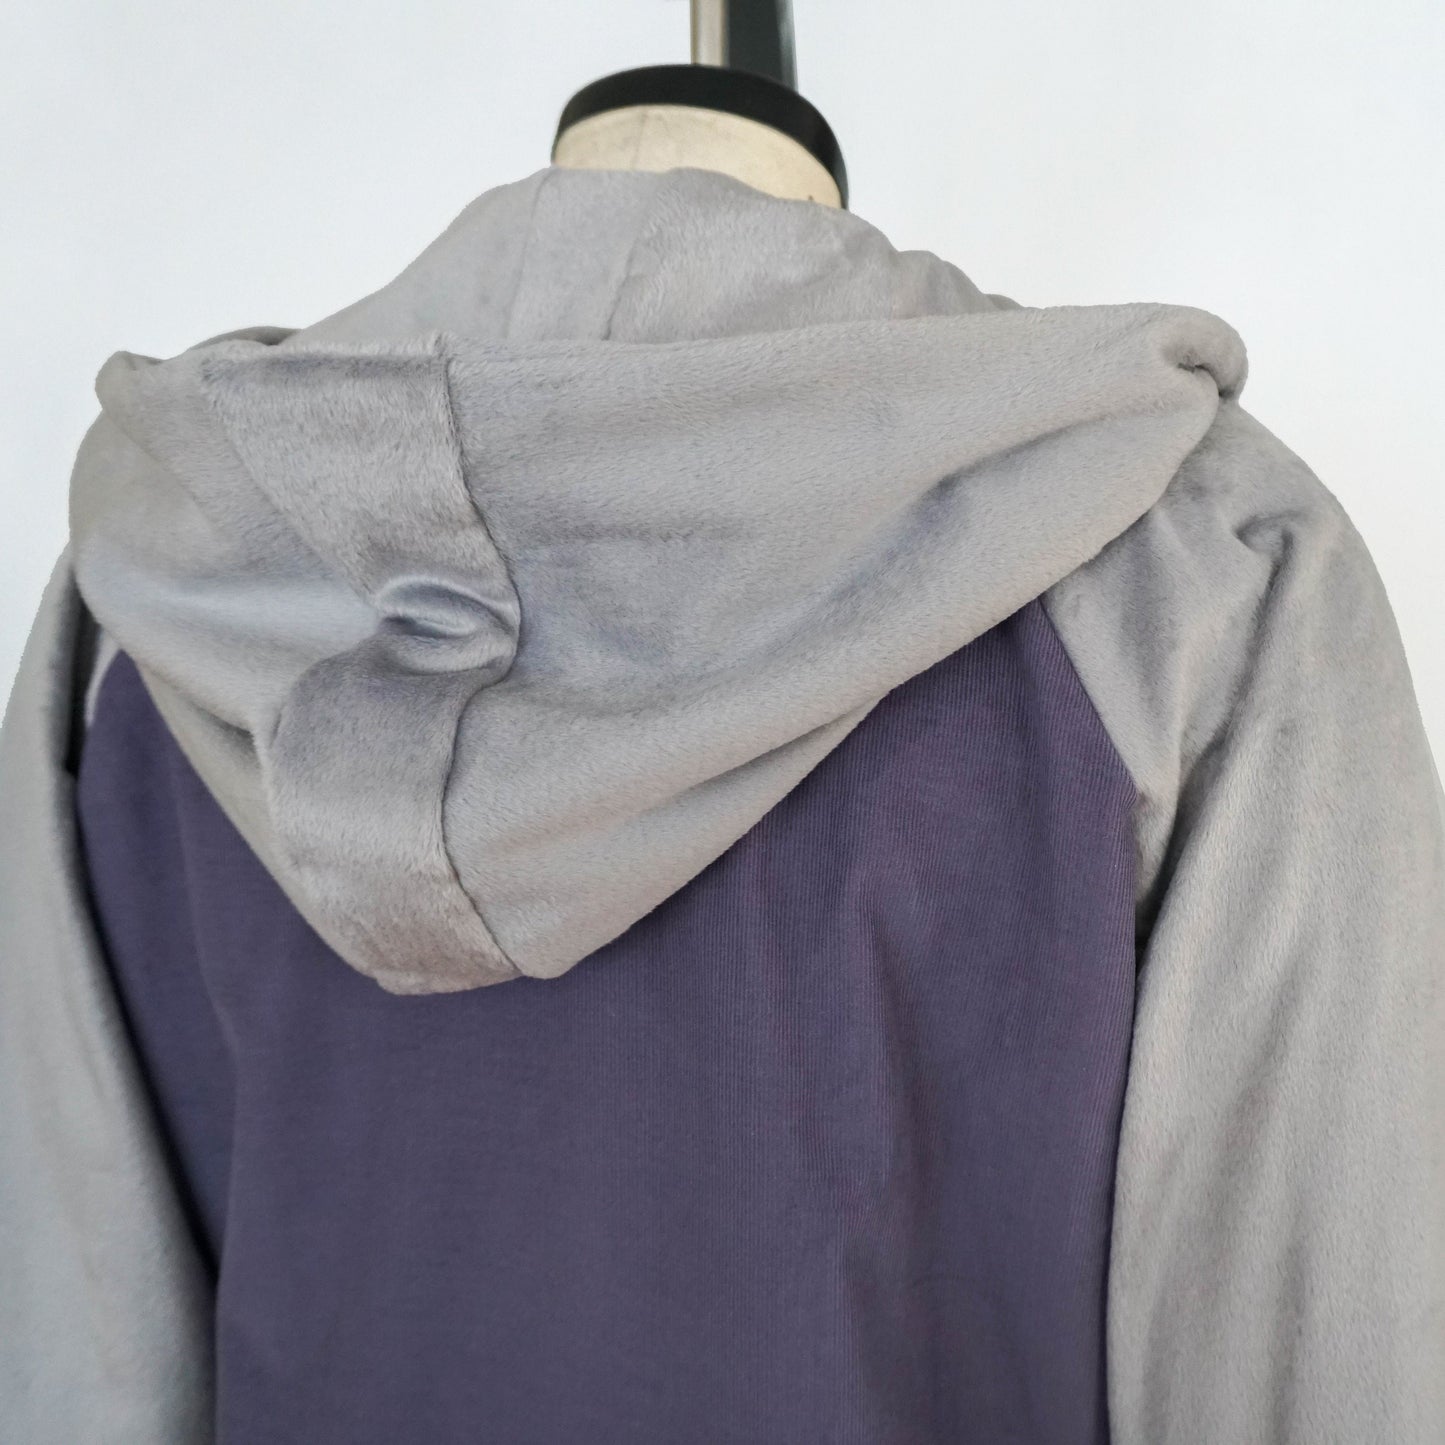 Raglan Sleeve Zip Up Jacket Sweater Cosplay Sewing Pattern/Downloadable PDF File